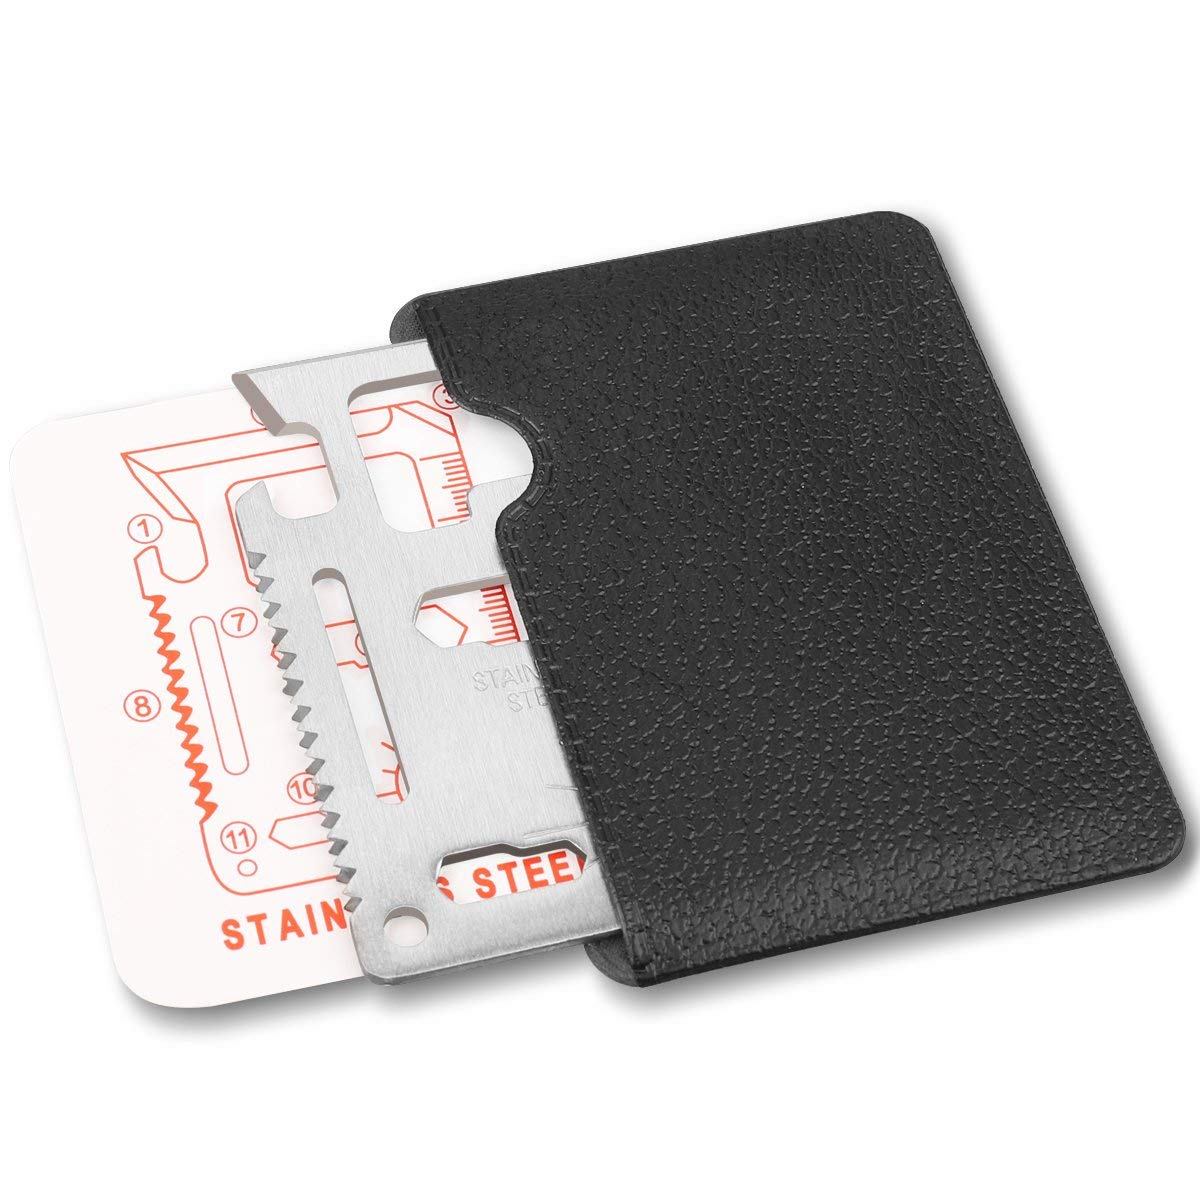 11 in 1 Multi Tool Credit Card Survival Tool (2 Pack)